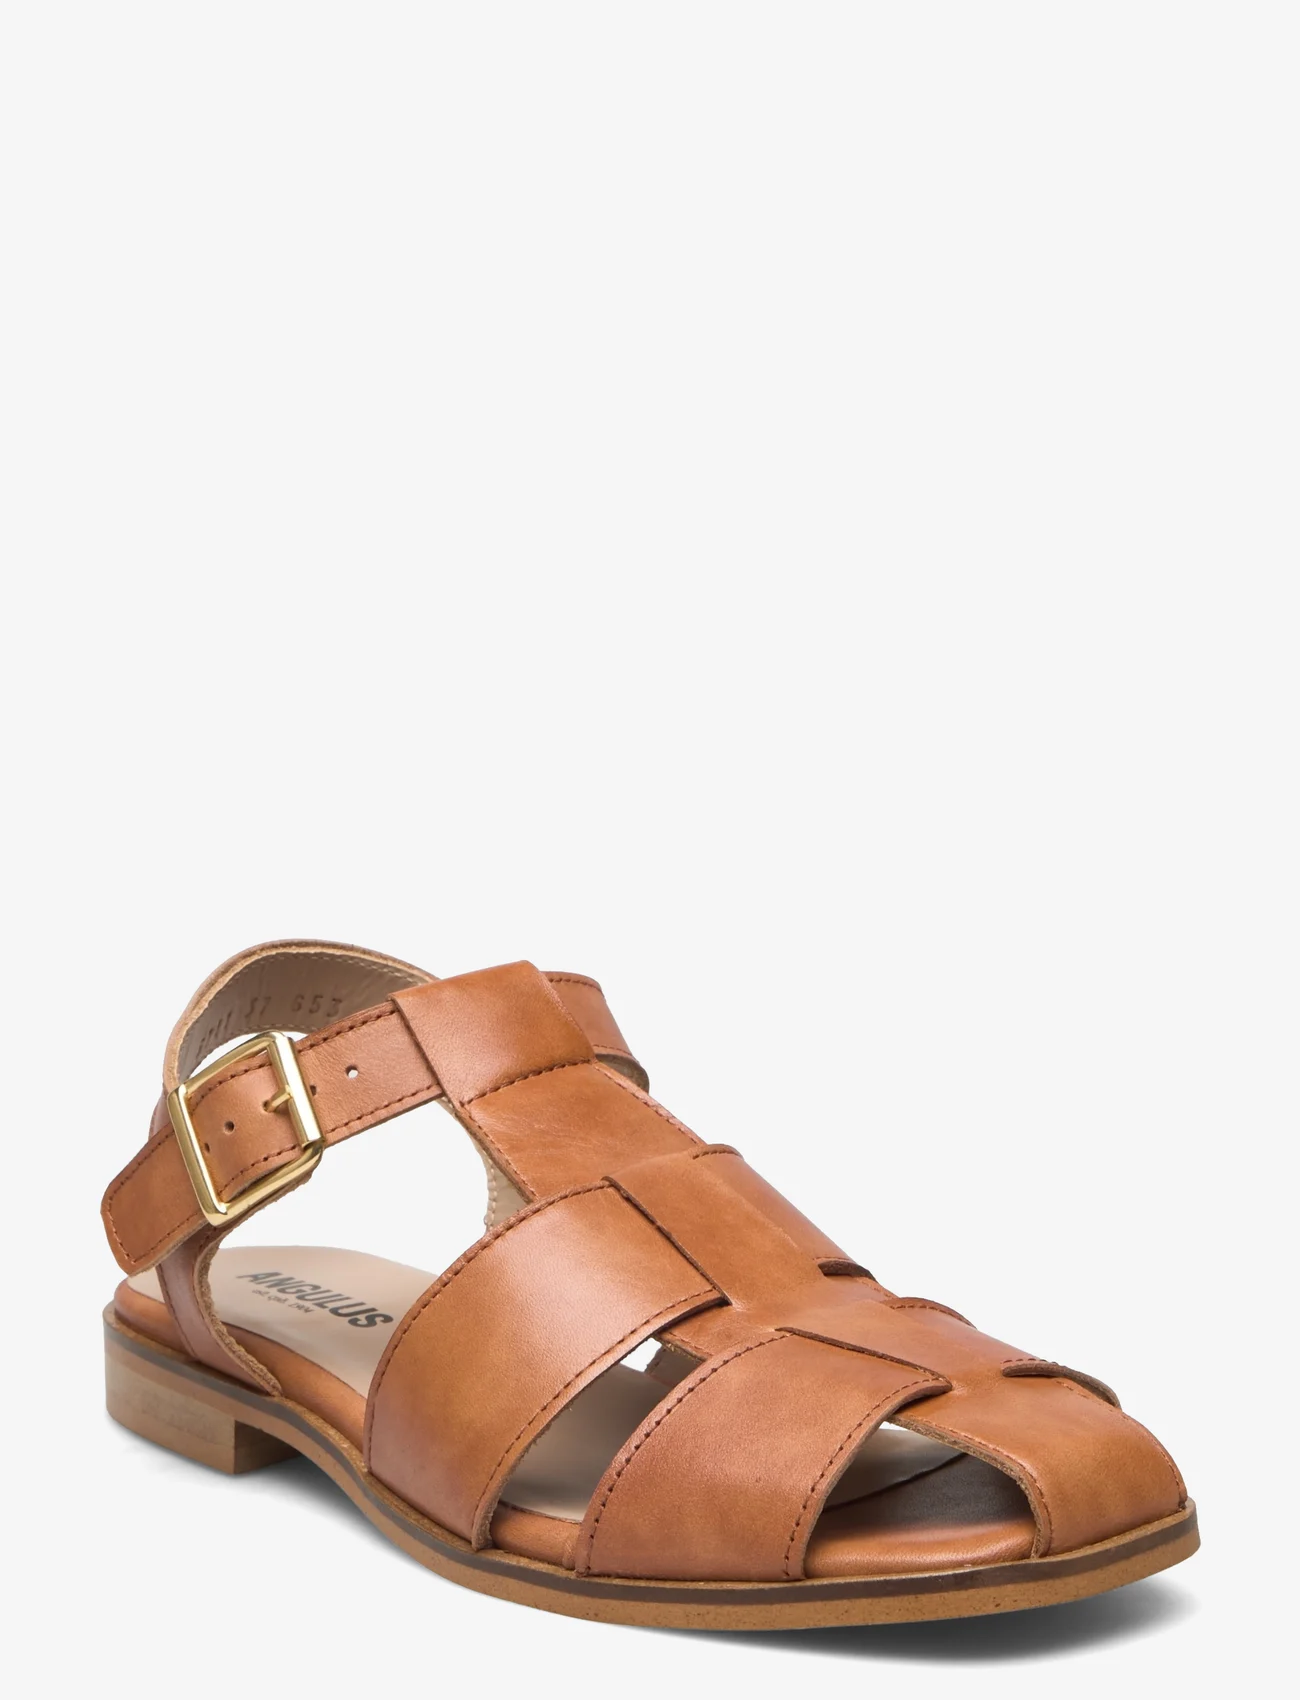 ANGULUS - Sandals - flat - flat sandals - 1789 tan - 0